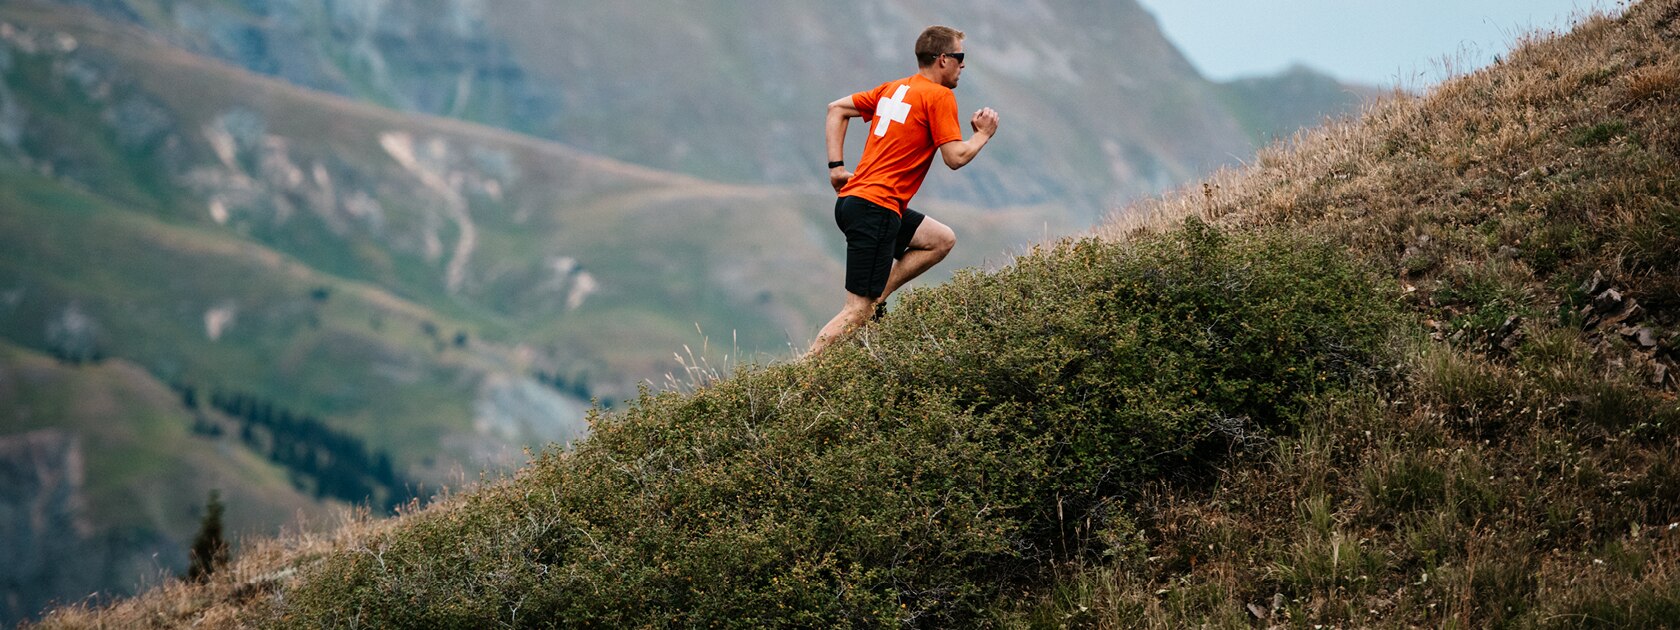 man in orange shirt and black shorts trail runs up a steep grassy slope